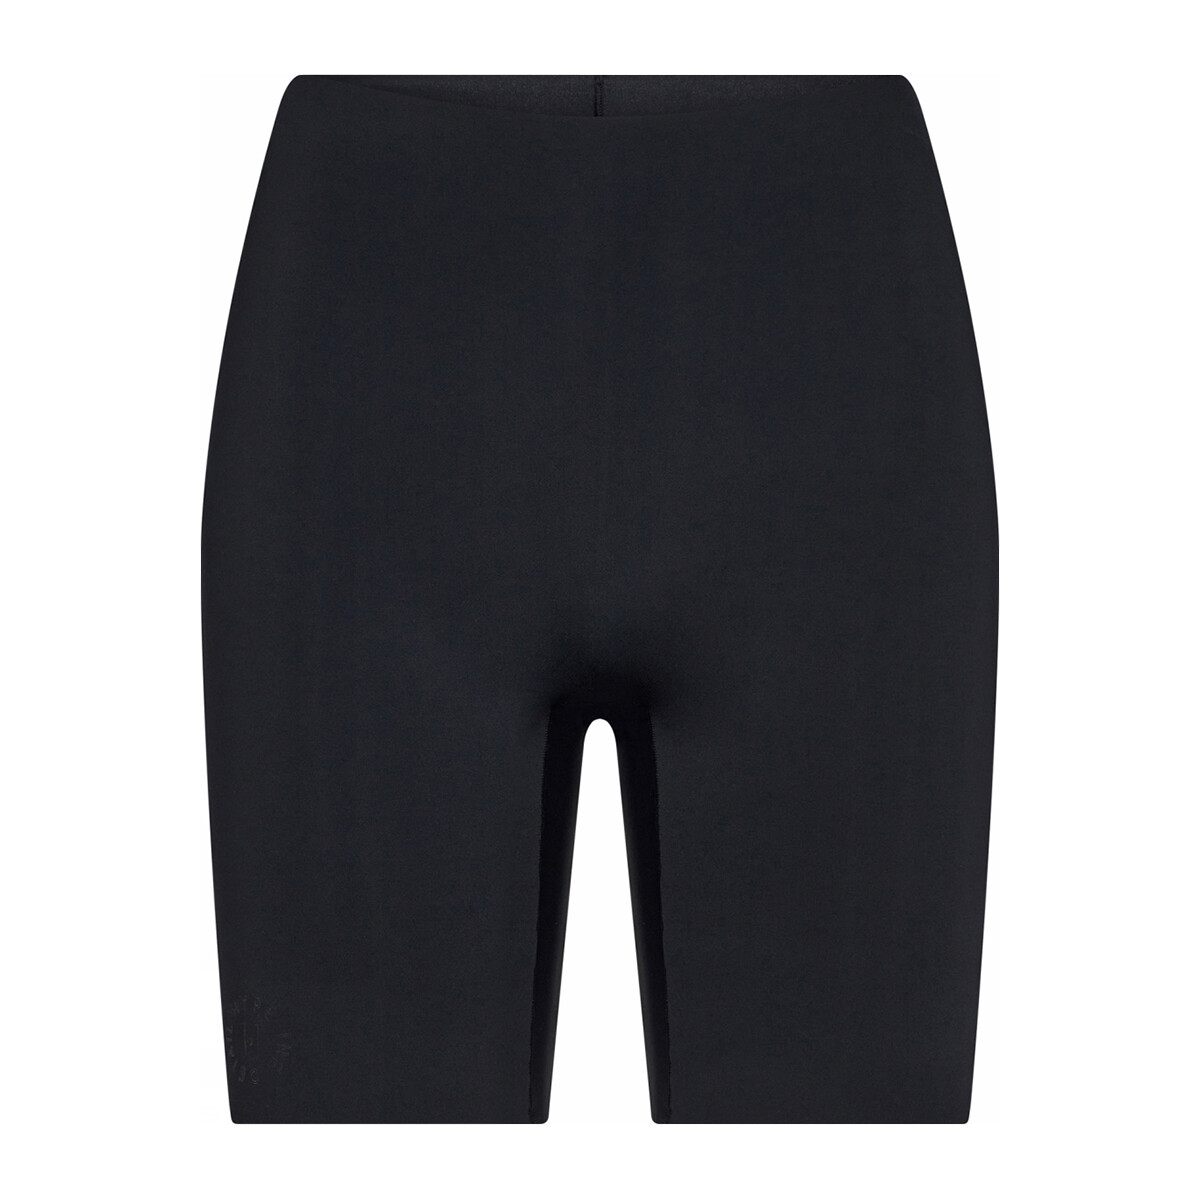 Se Hype The Detail Essentials Shorts, Farve: Sort, Størrelse: XS, Dame hos Netlingeri.dk